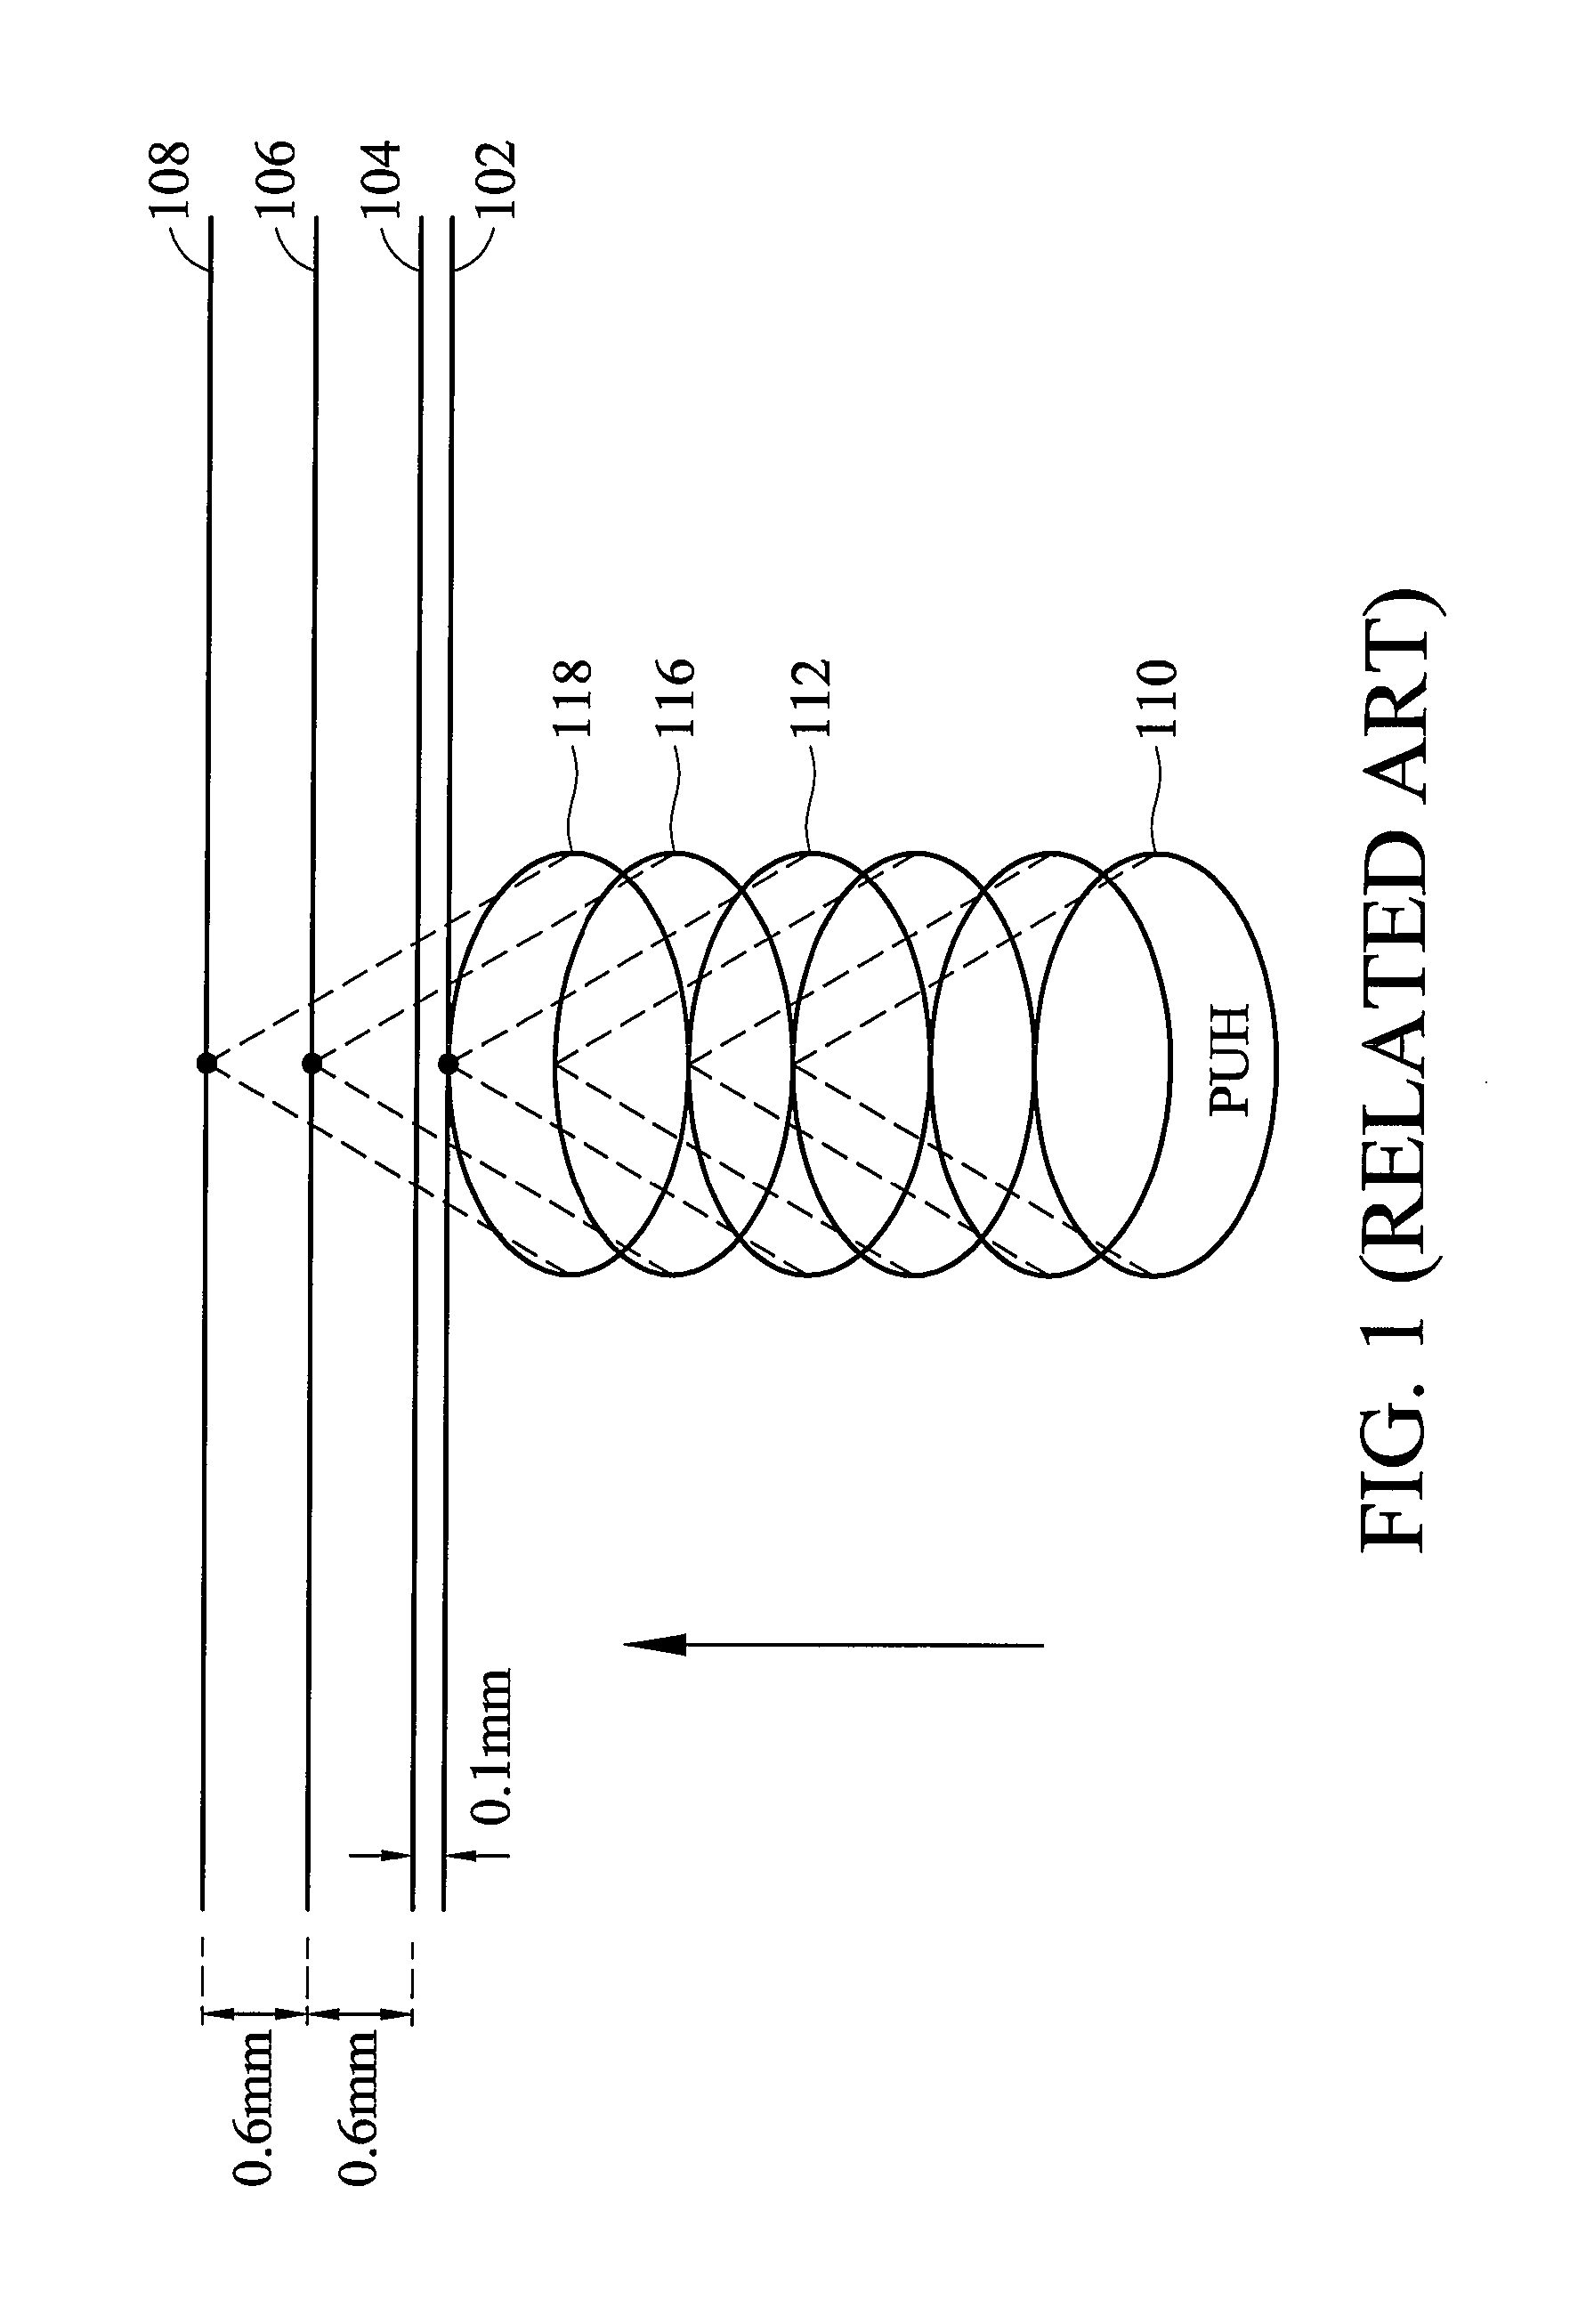 Method for identifying optical disk type